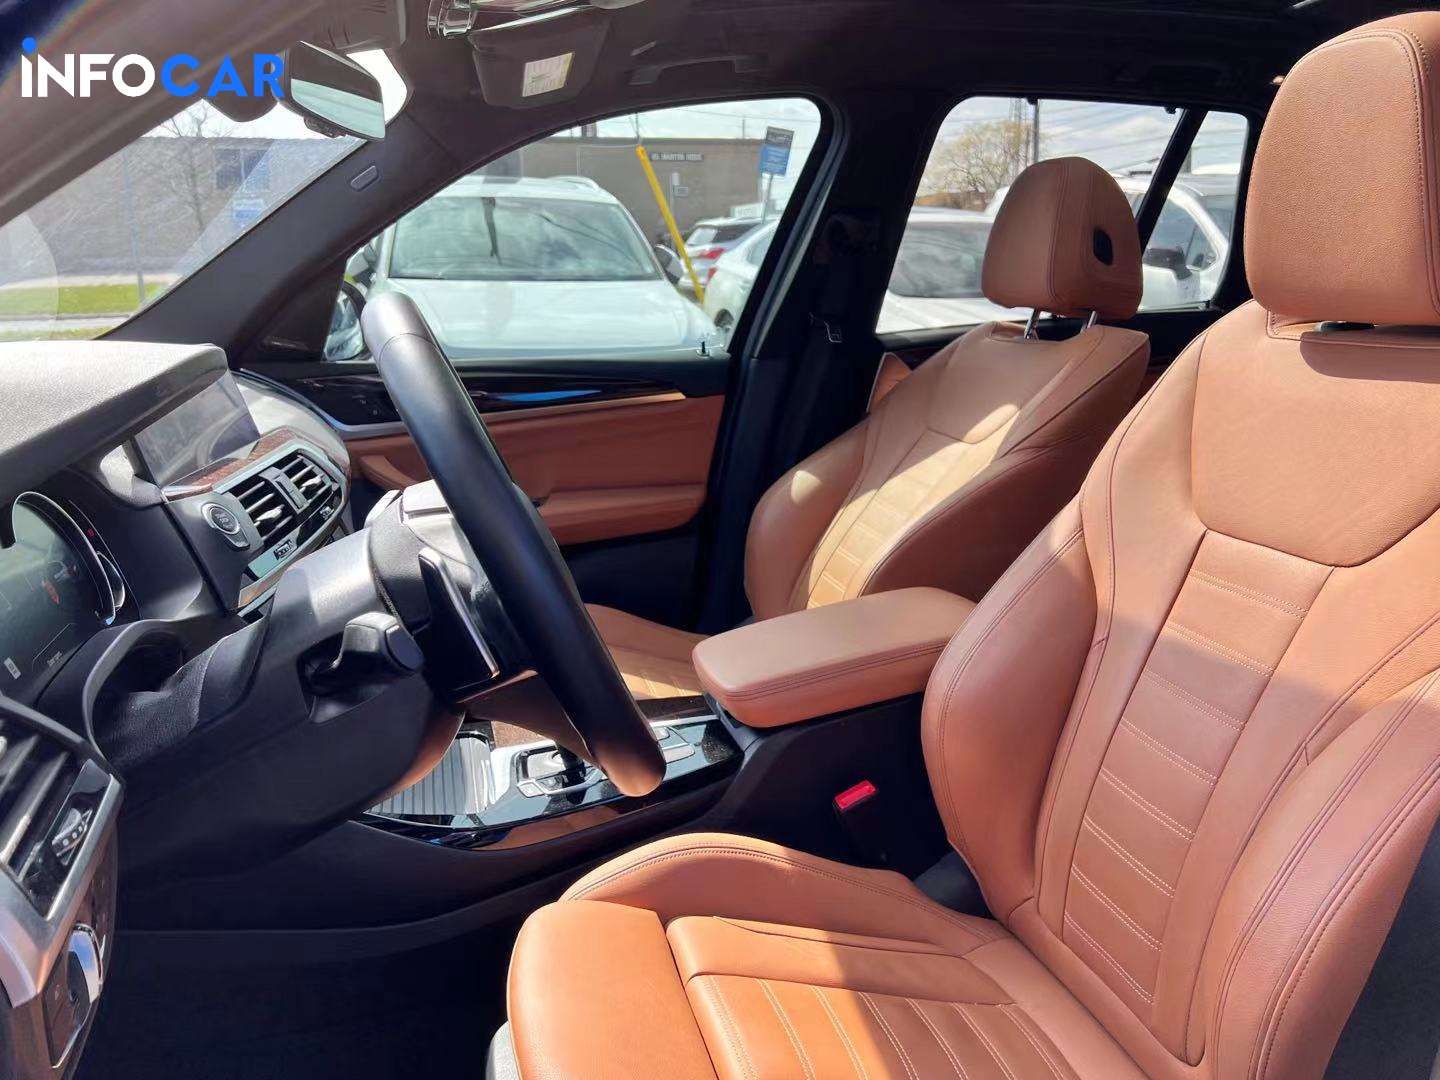 2019 BMW X3 30i - INFOCAR - Toronto Auto Trading Platform